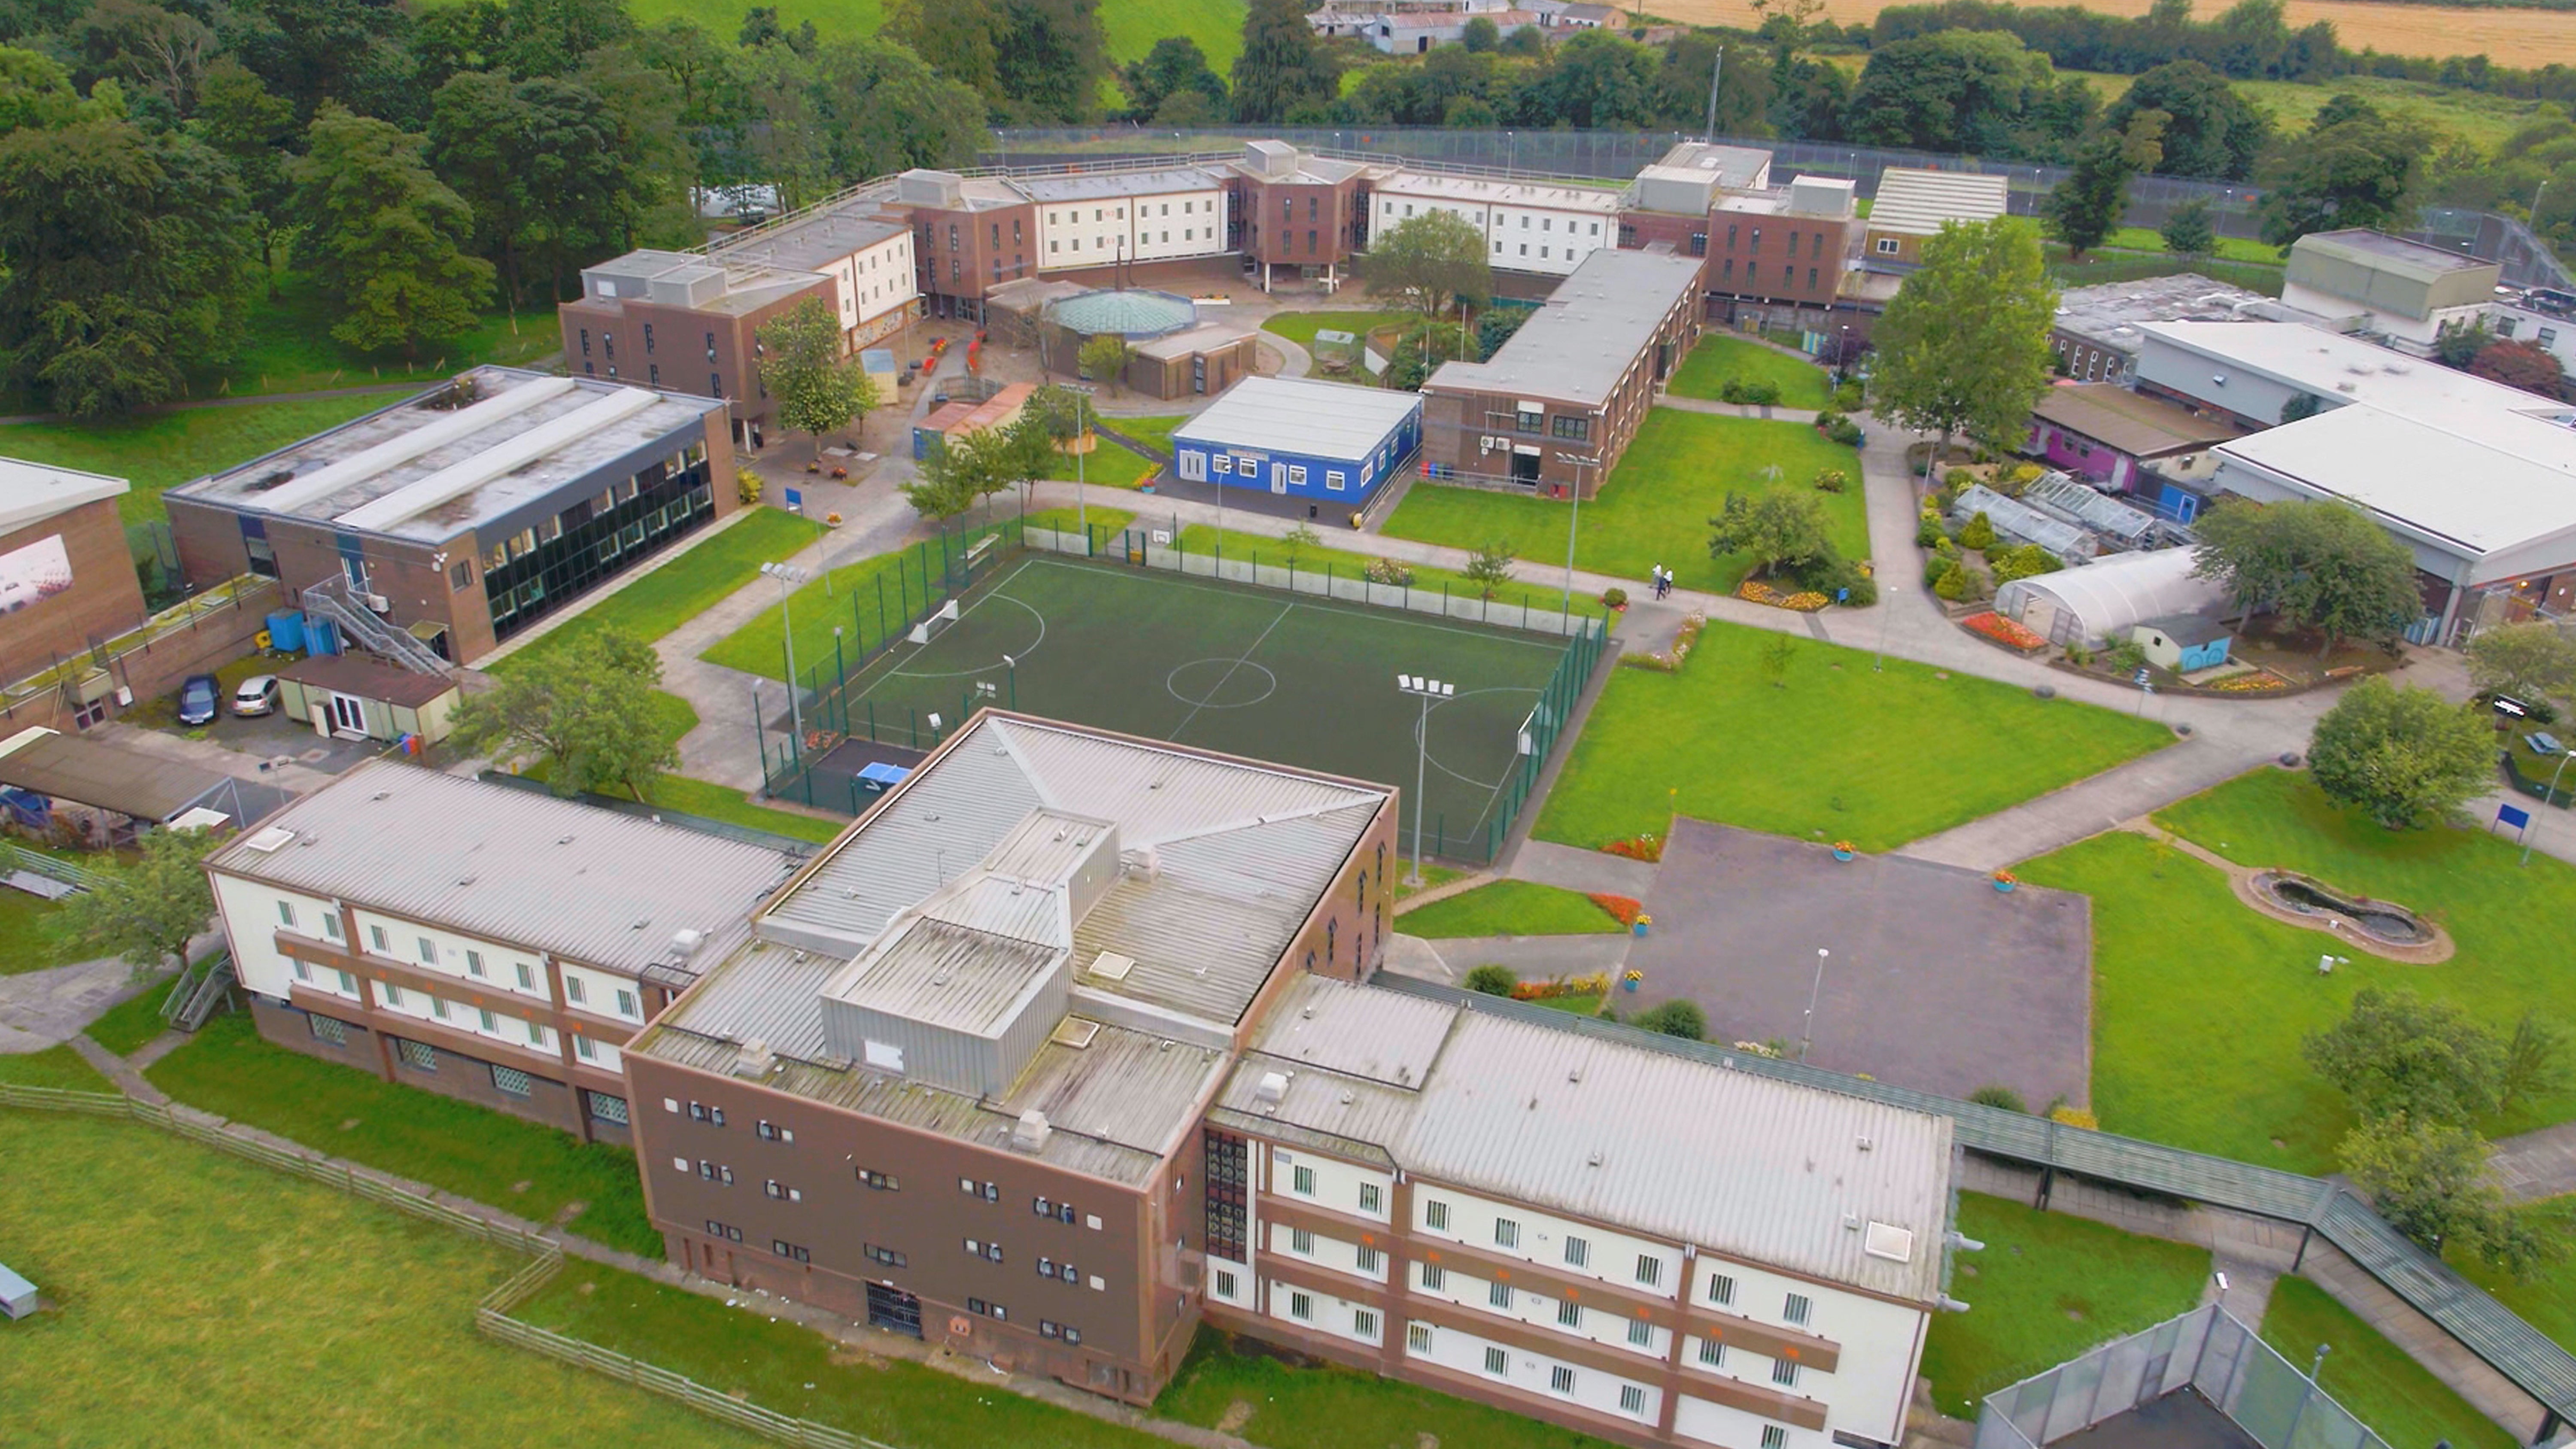 Hydebank looks more like an Oxbridge college than a prison